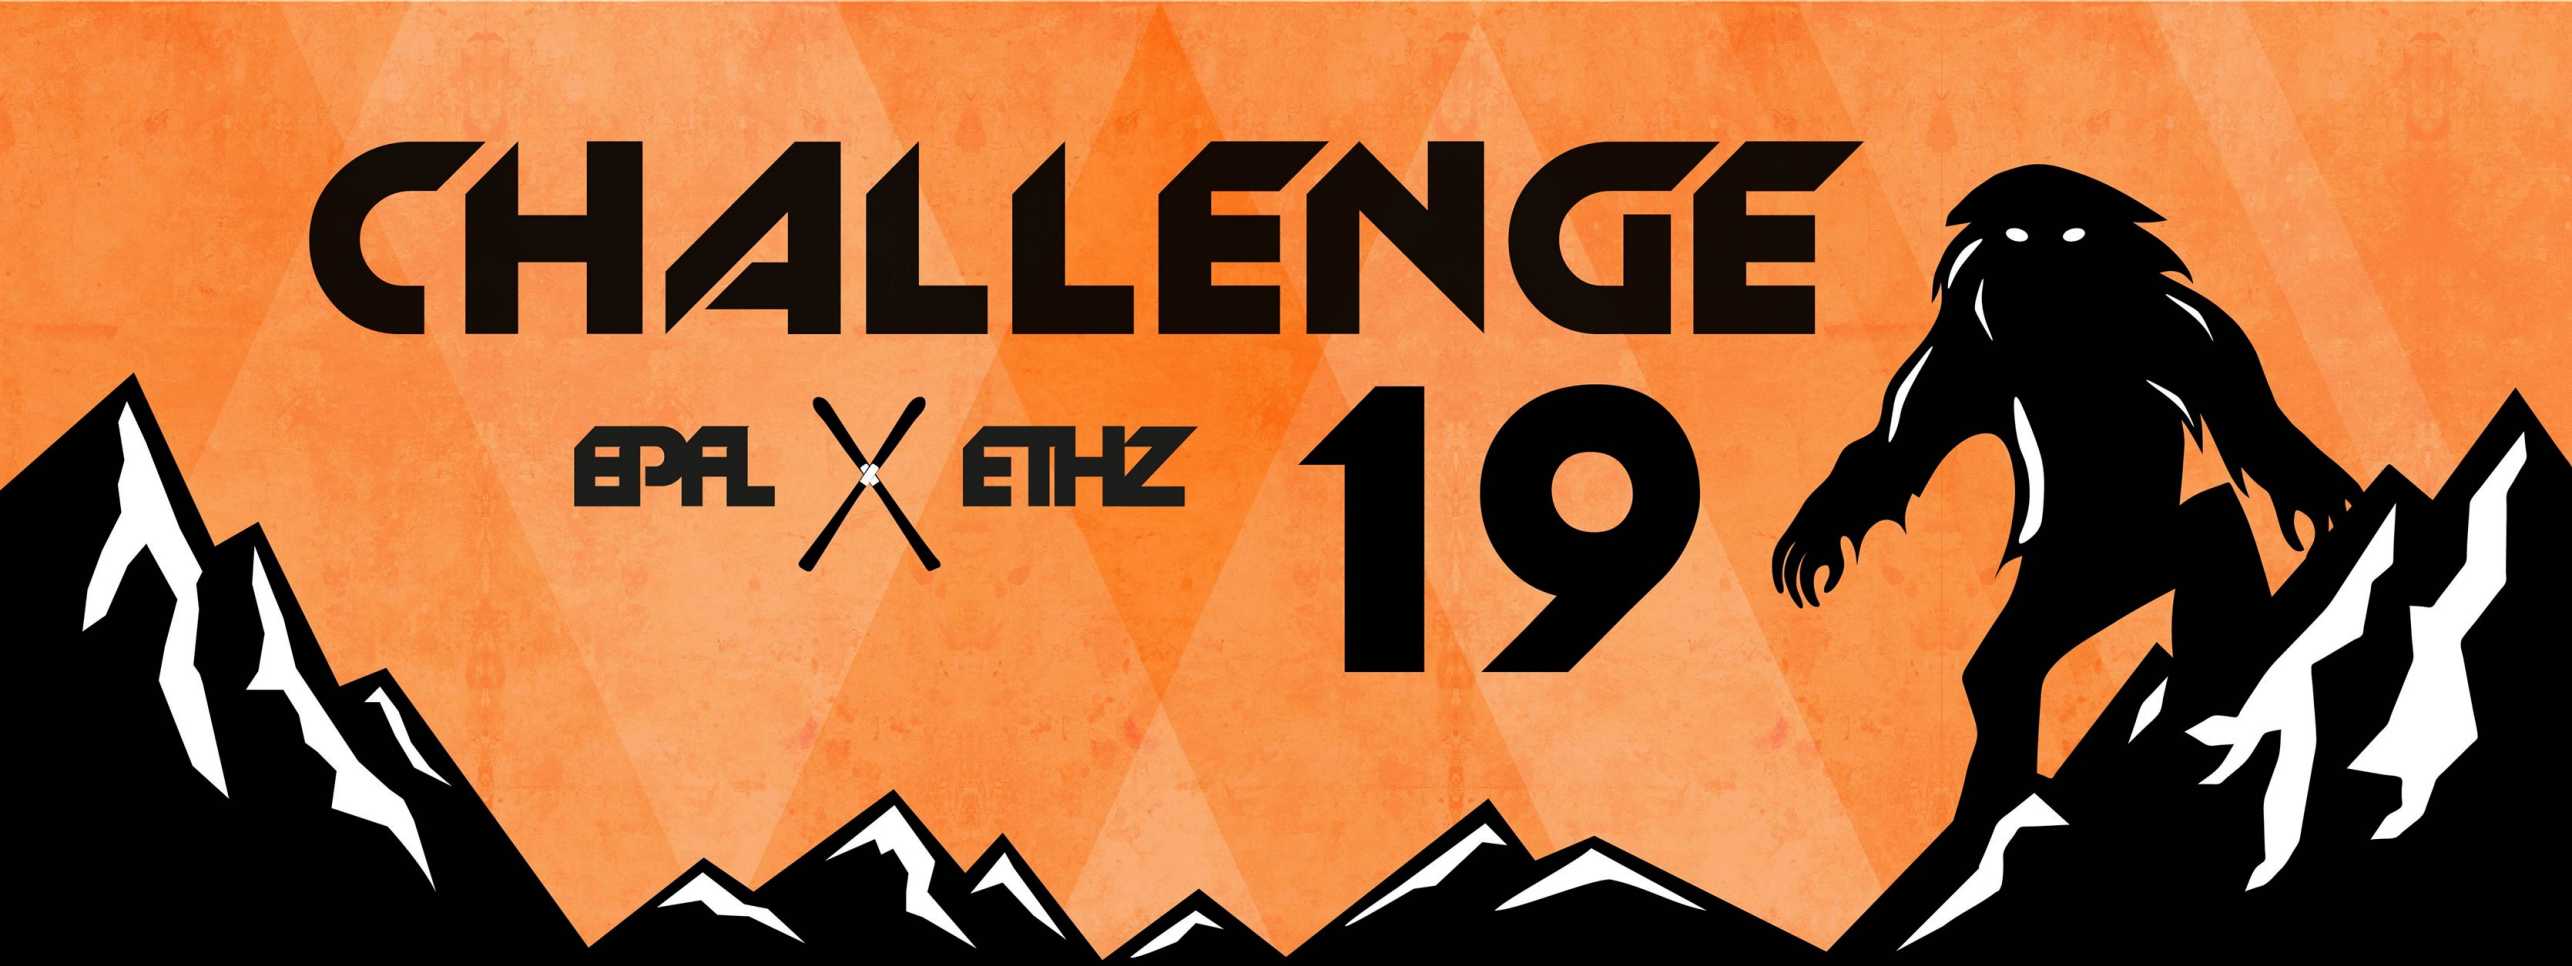 Challenge 19